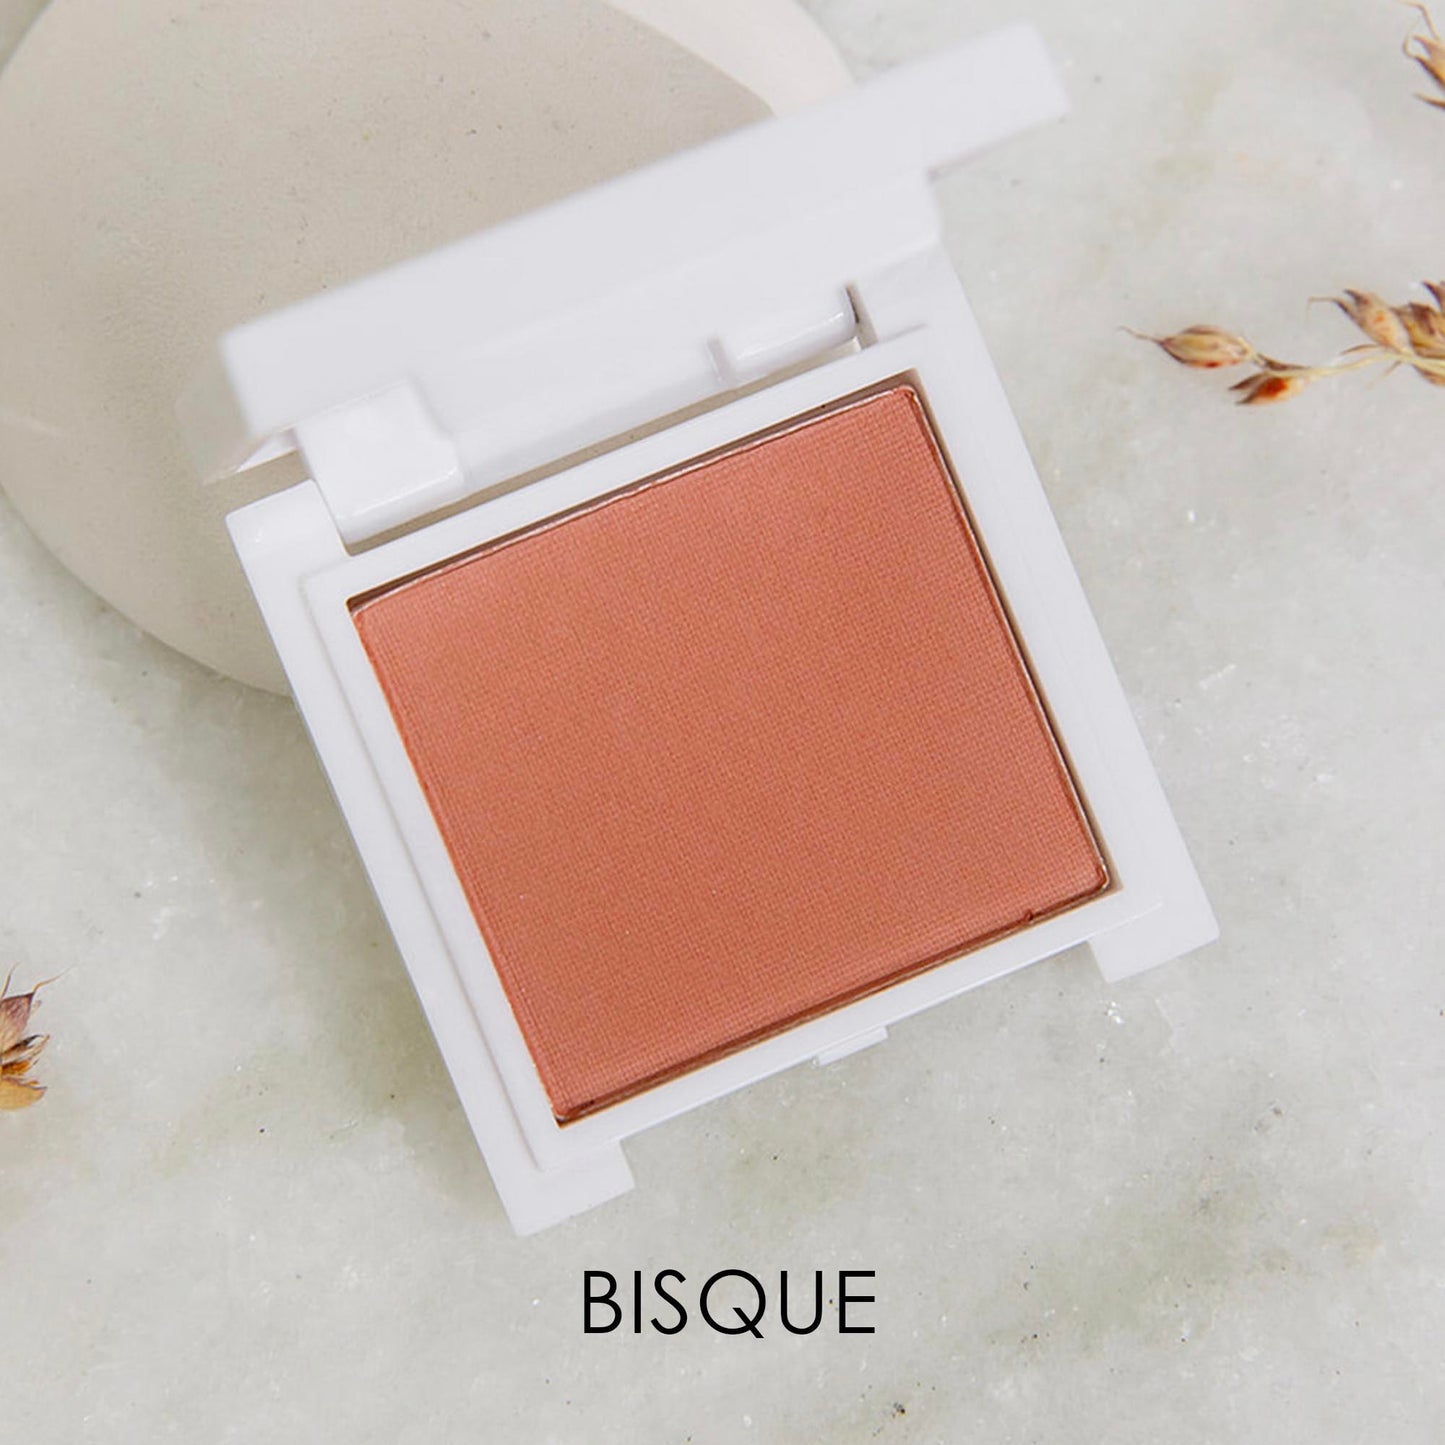 Aronia Berry + Blush - Soft Finish Blush